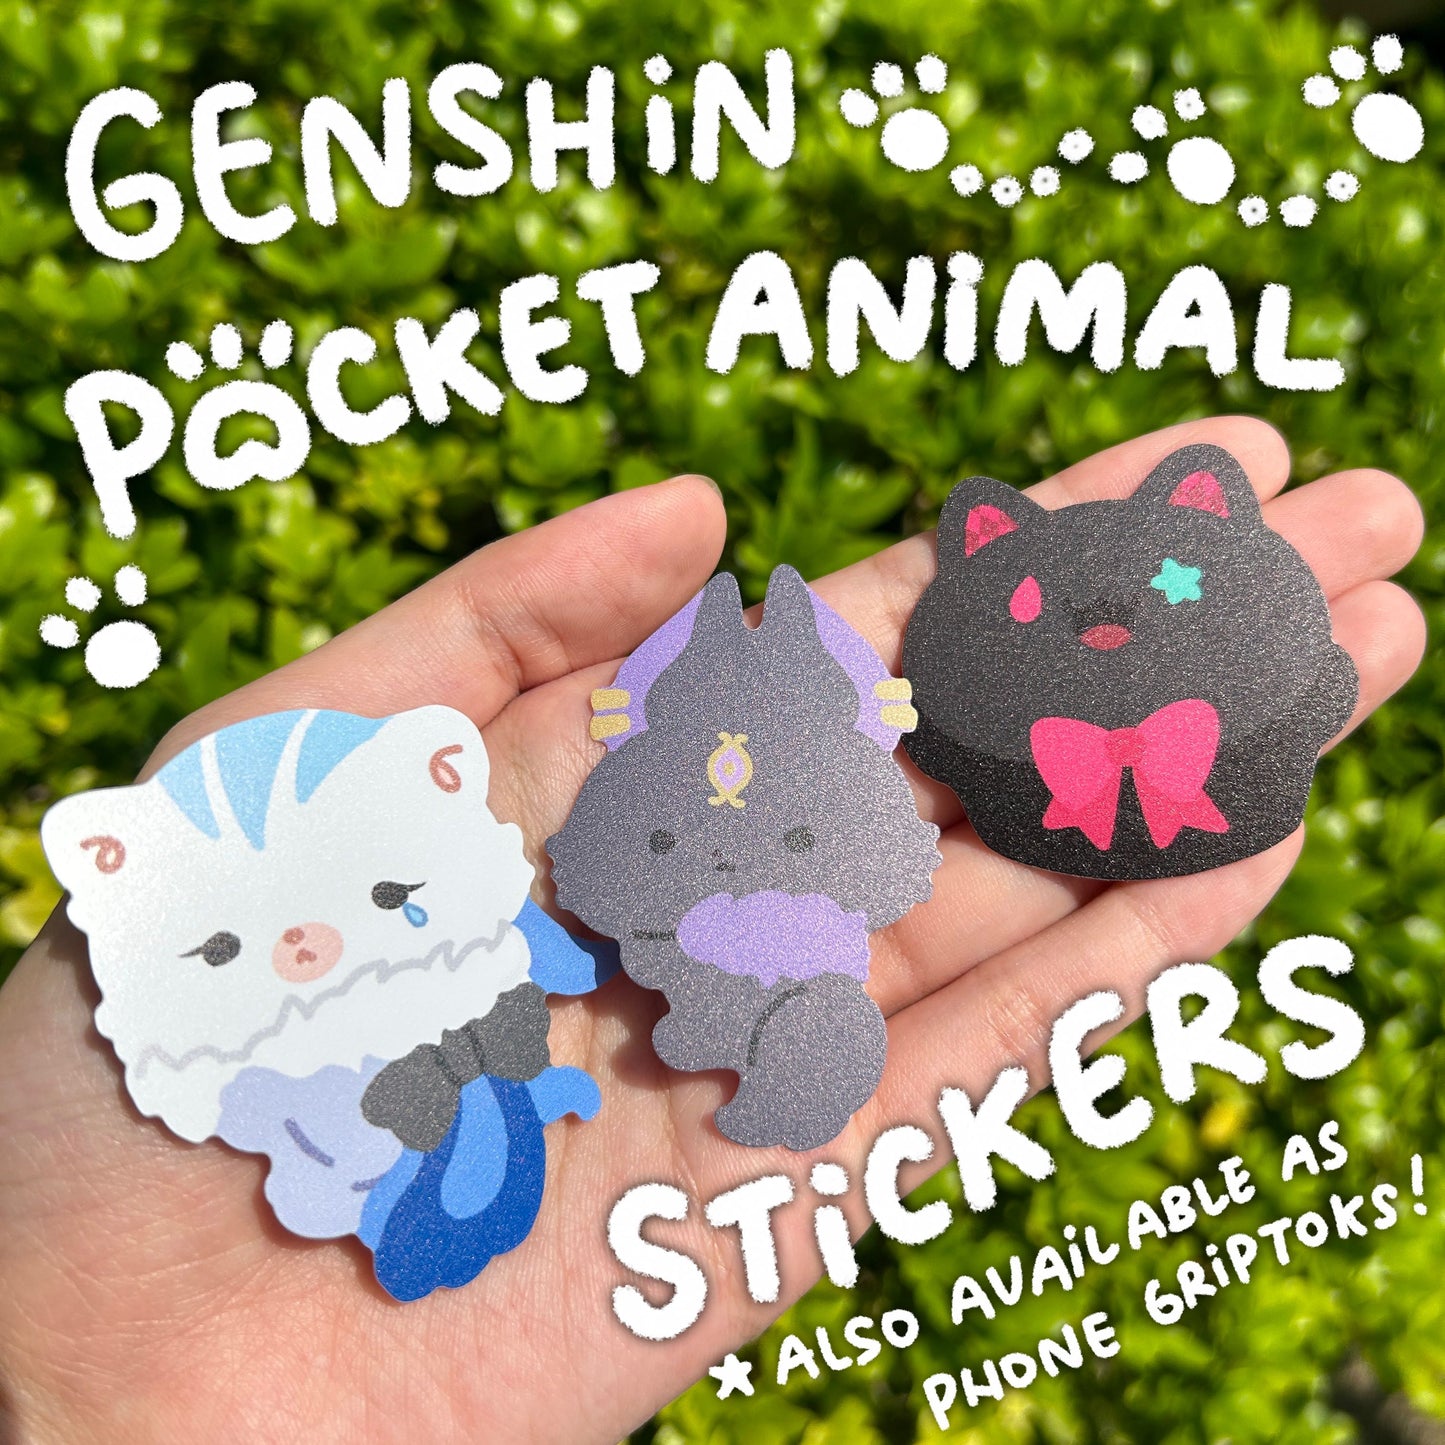 Genshin Pocket Animal Stickers